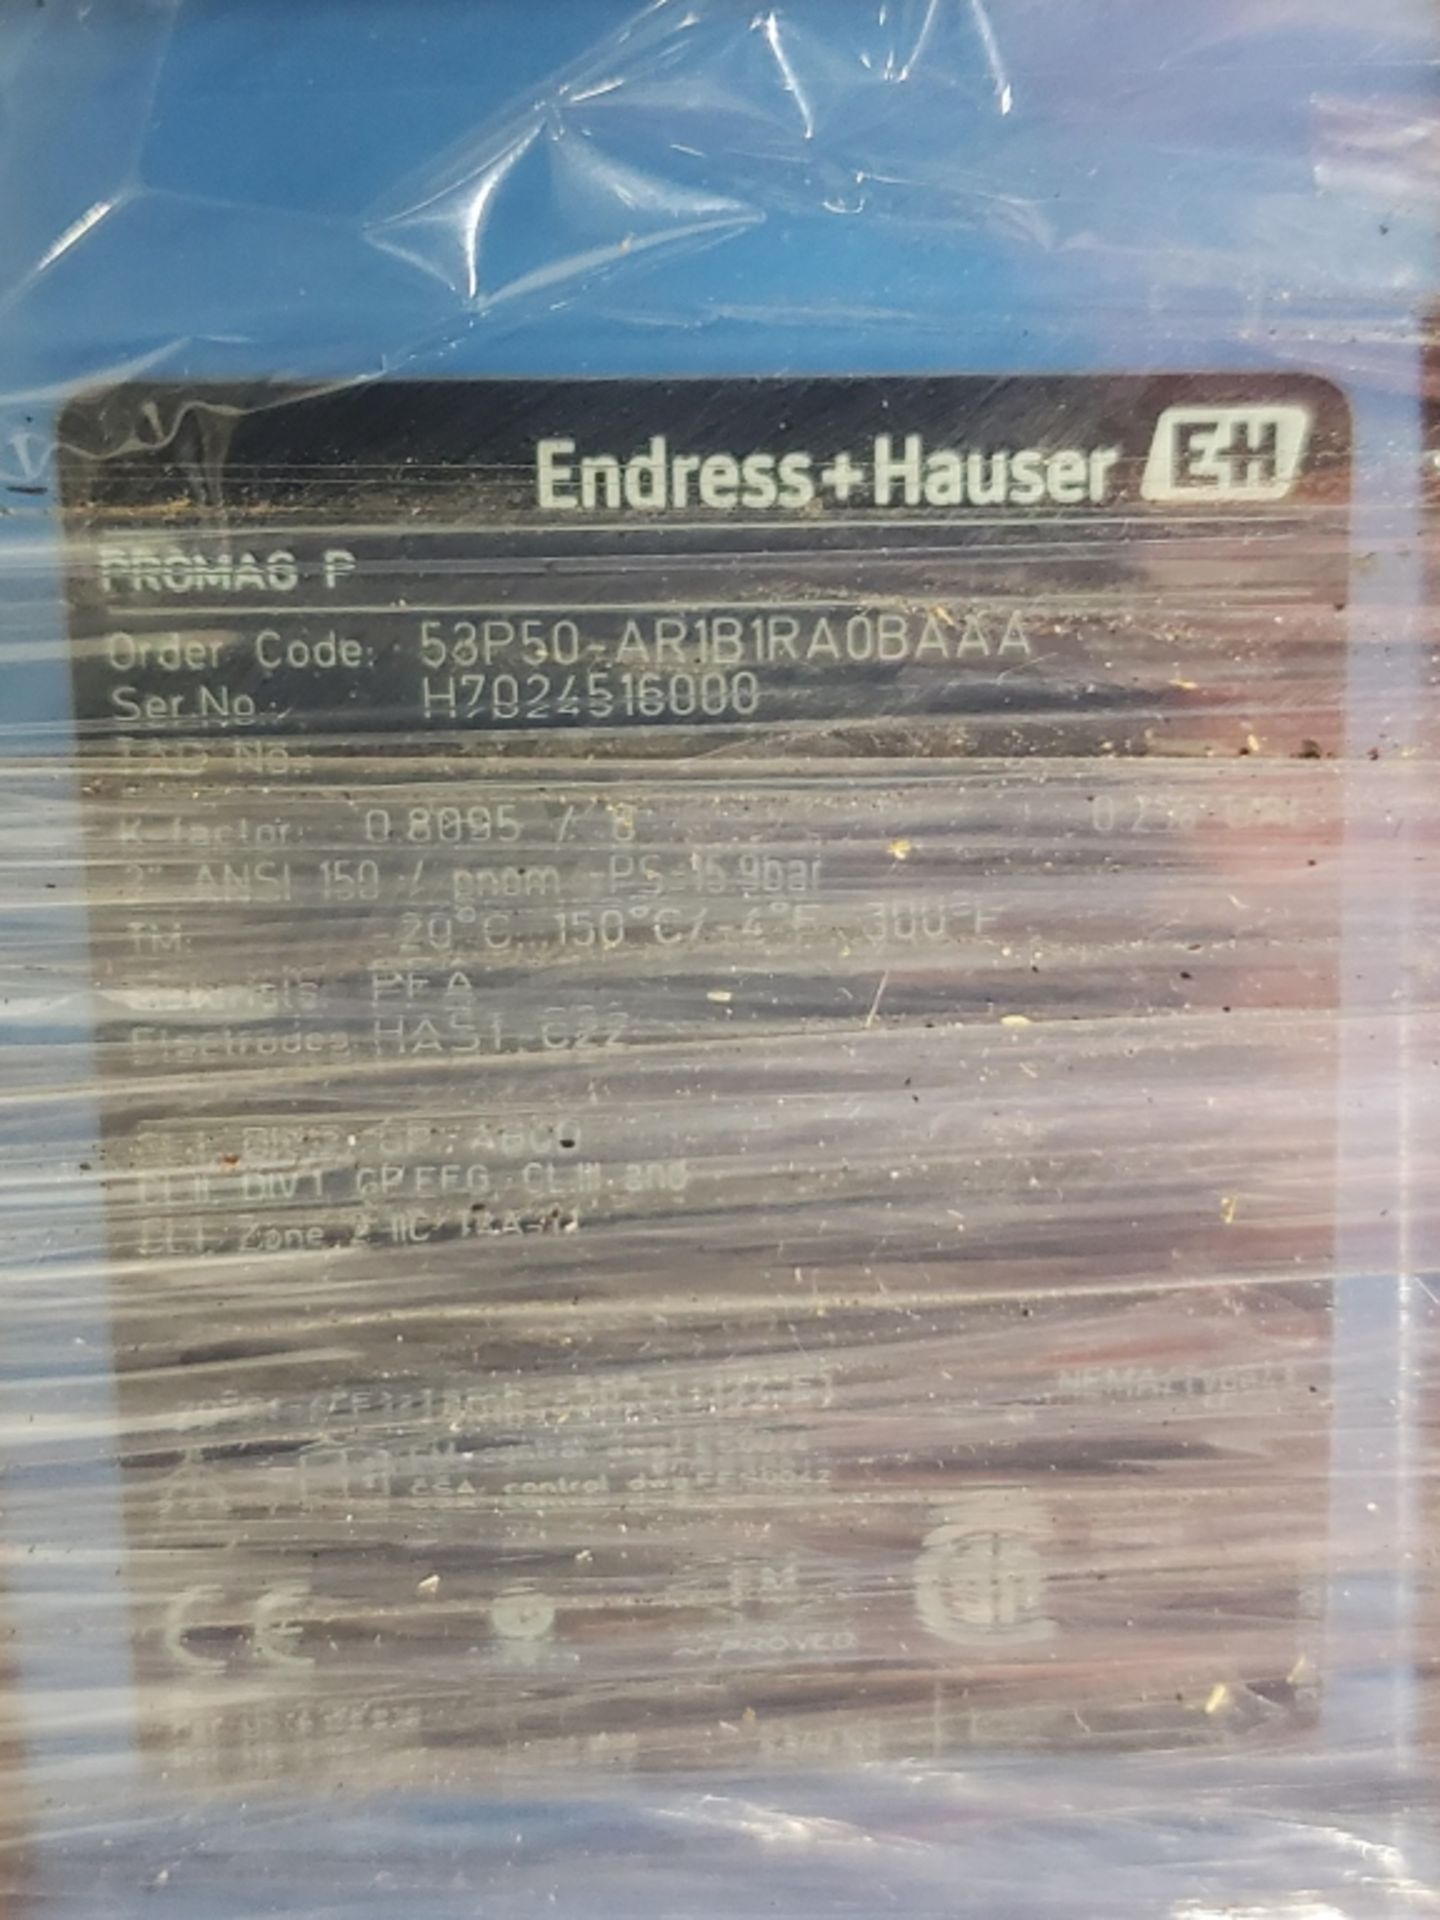 Endress+Hauser Promag 53P50 Flowmeter - Image 3 of 4